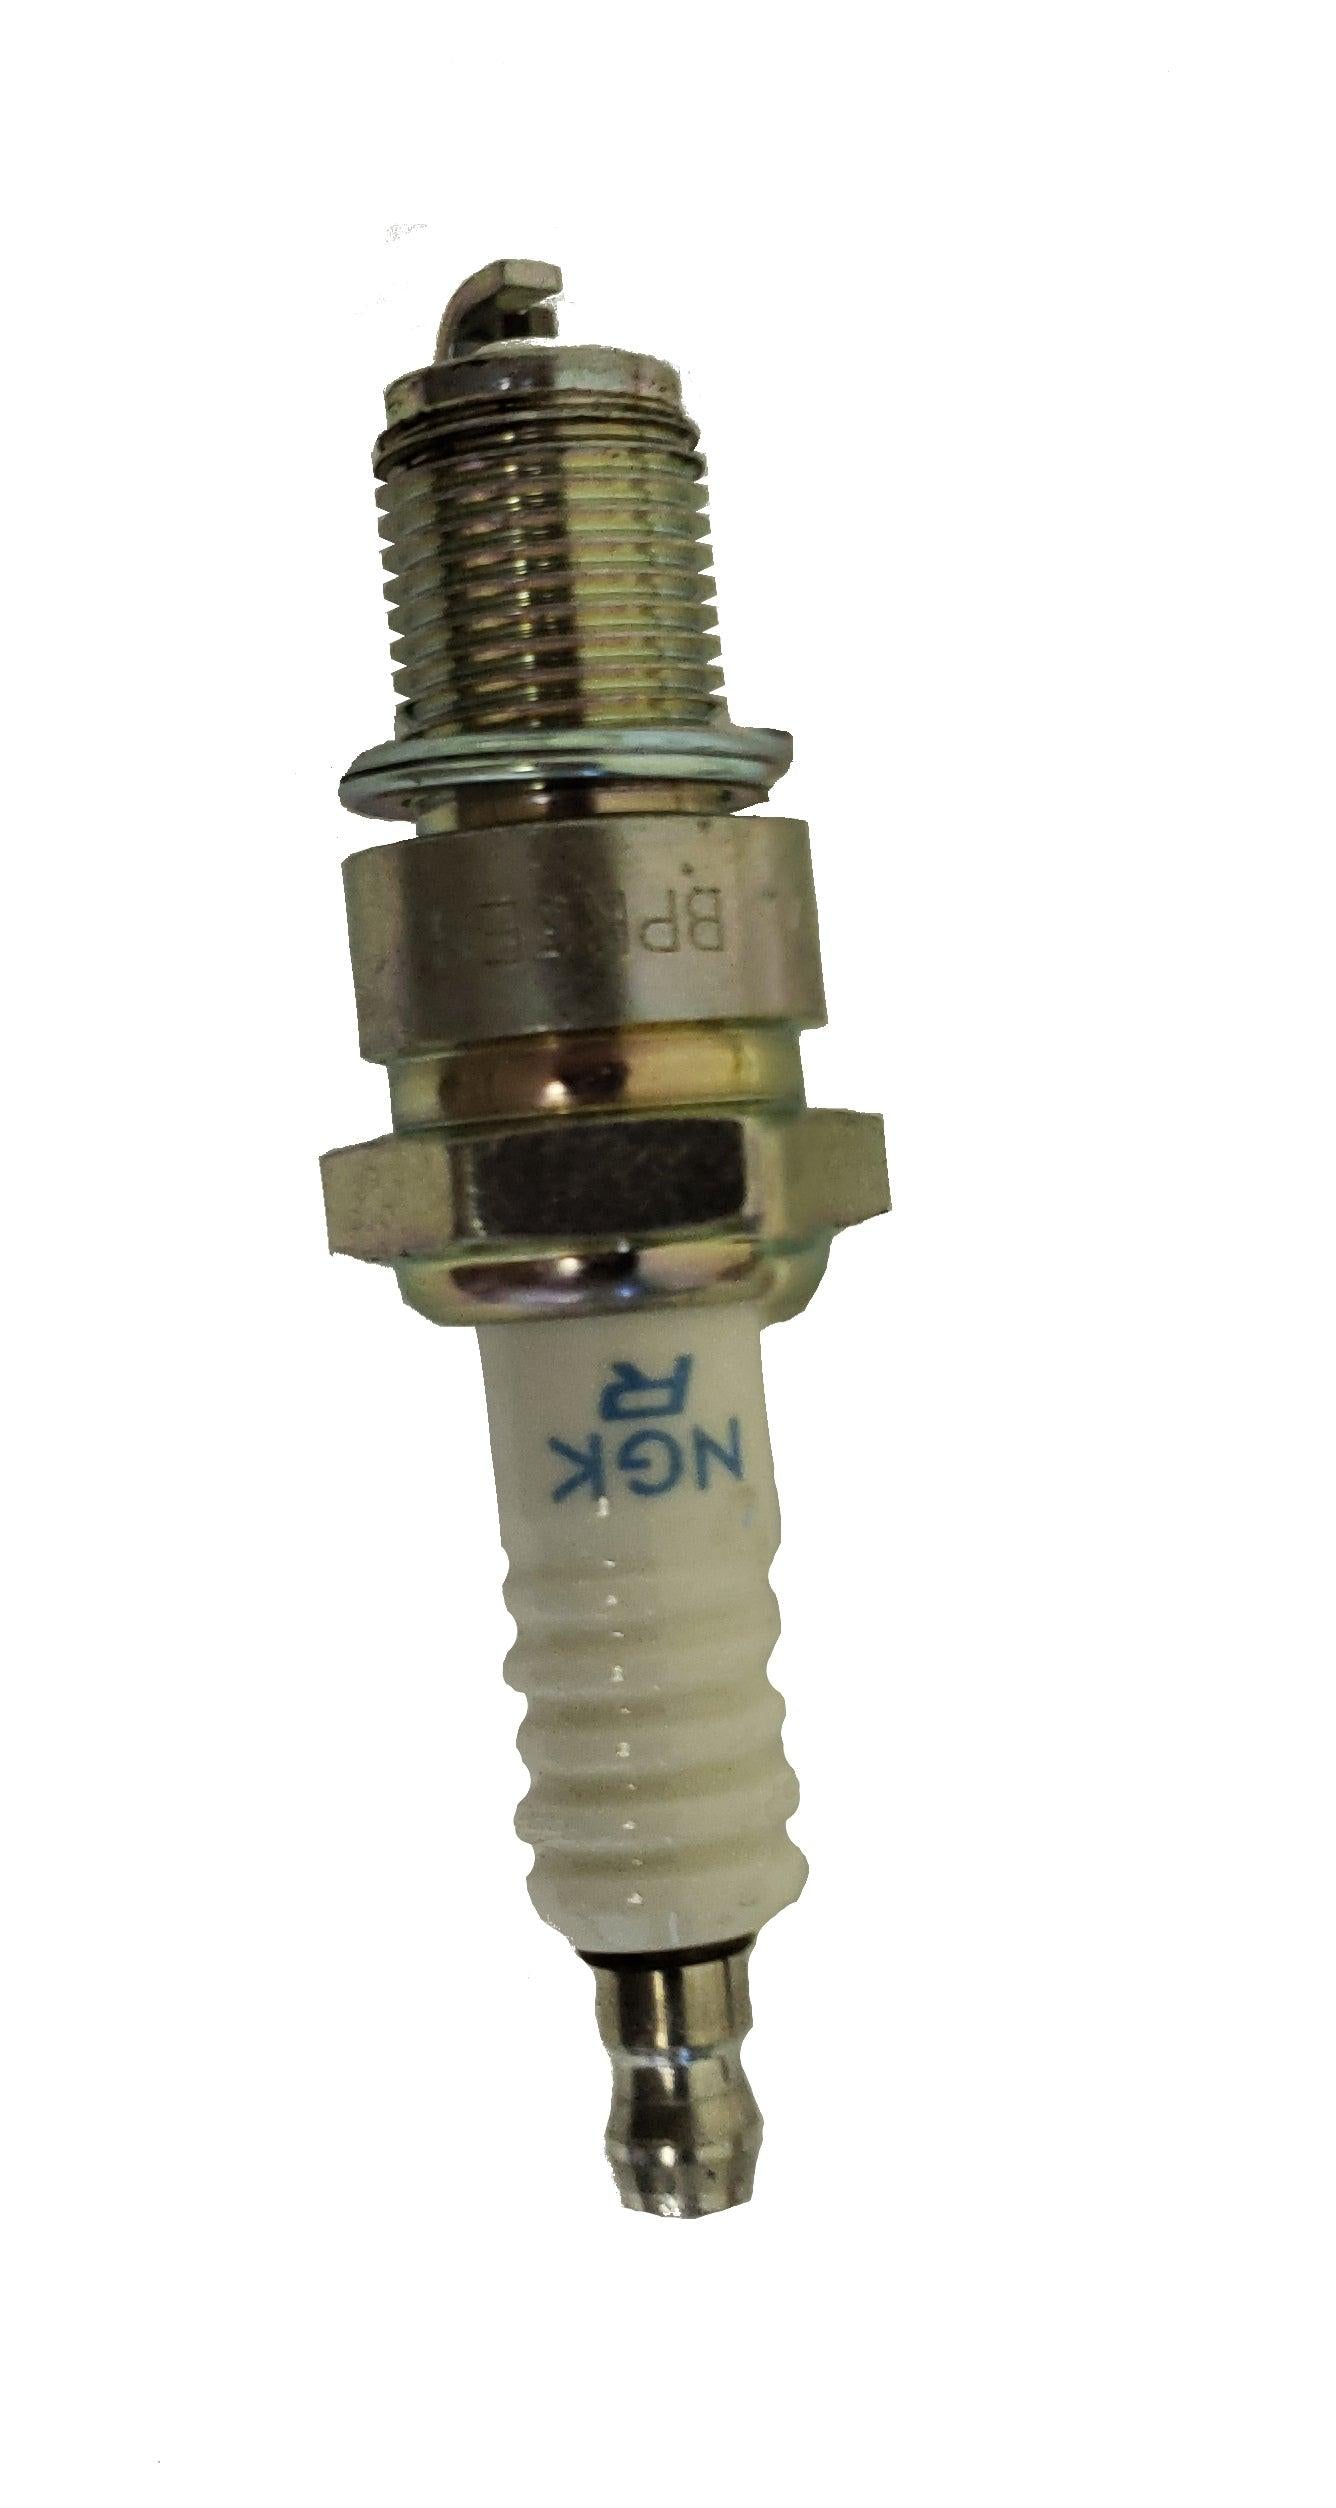 John Deere Original Equipment Spark Plug #M802138